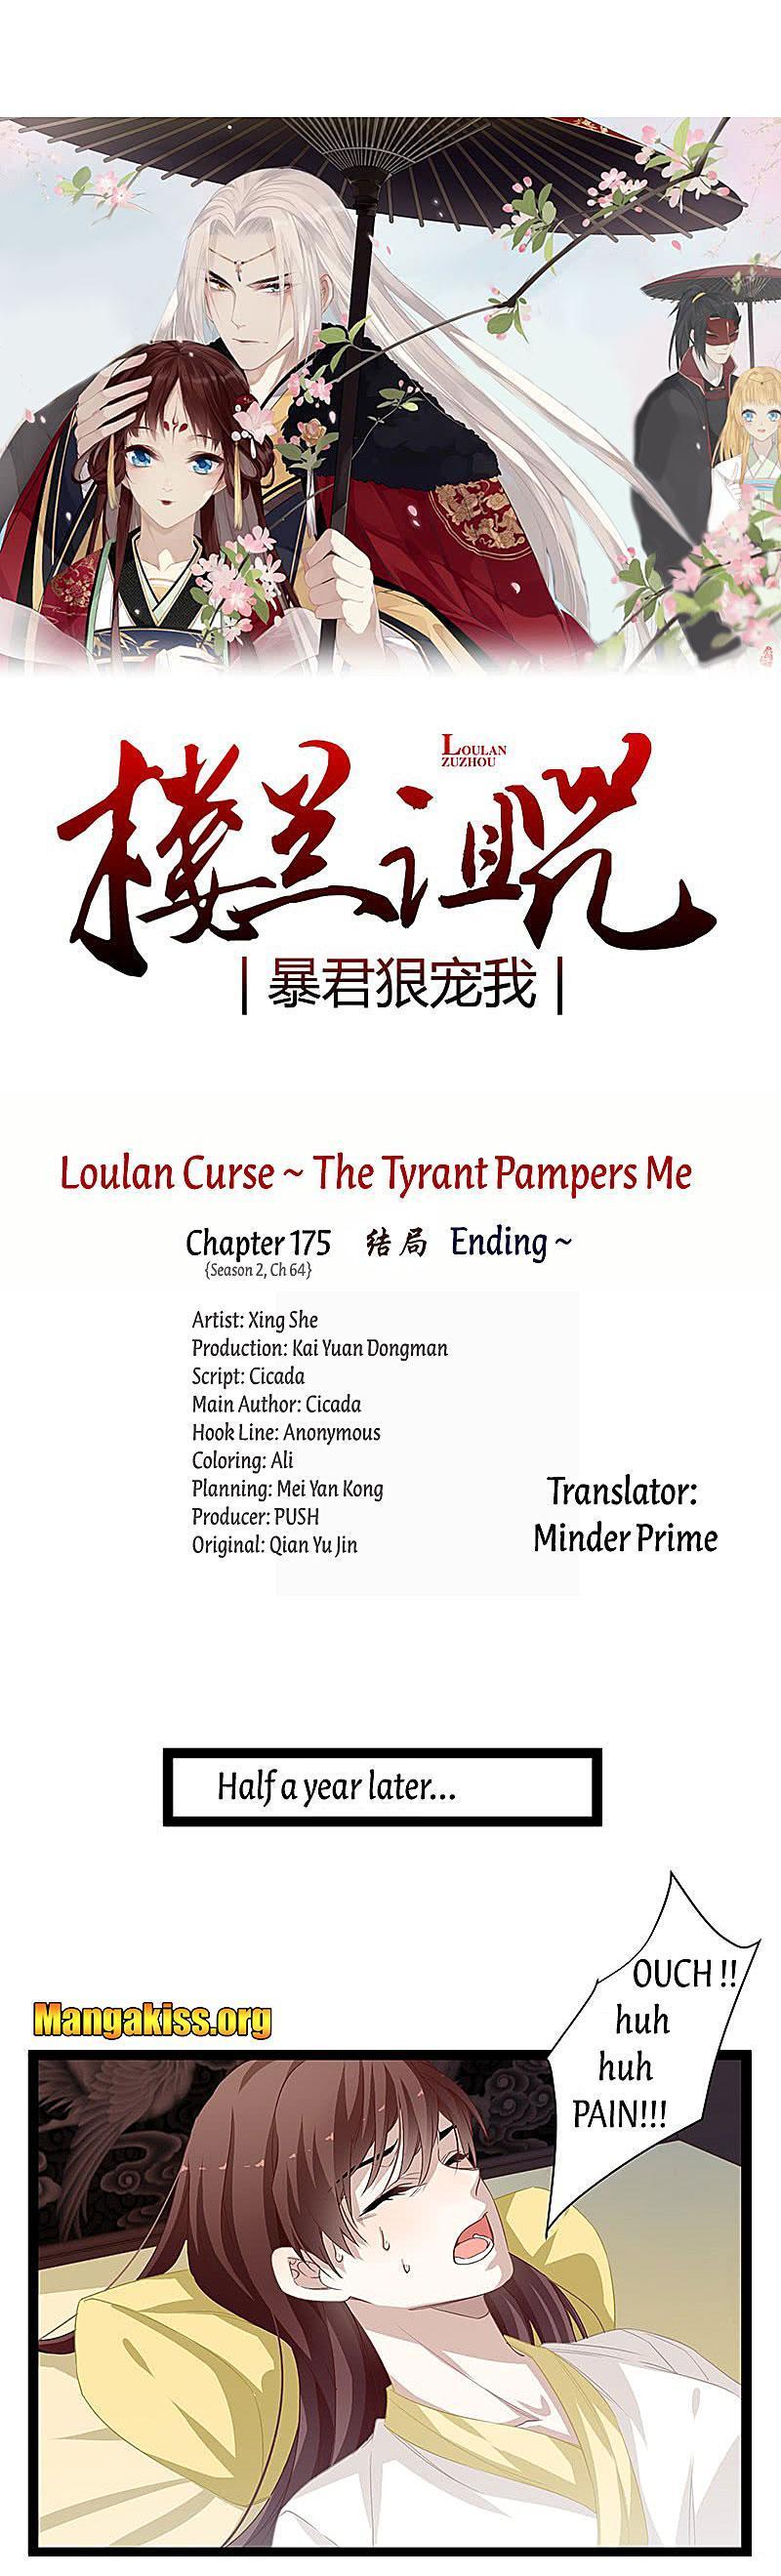 loulan curse tyrant pampered me manga chapter 1